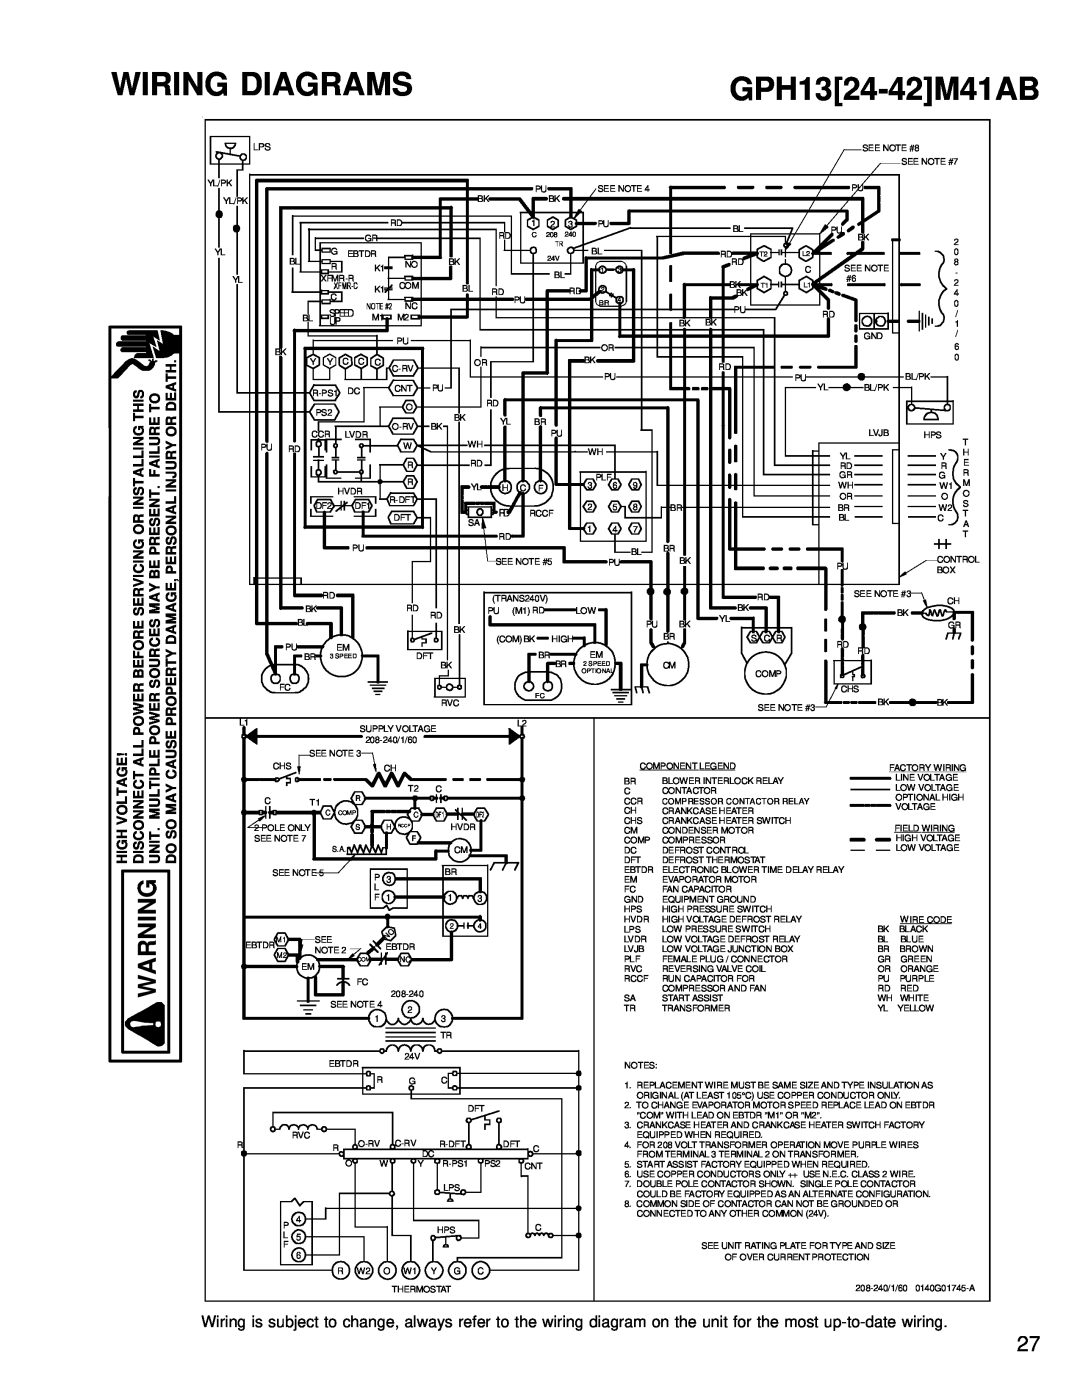 Goodman Mfg RT6332013r1 service manual Wiring Diagrams, GPH1324-42M41AB 